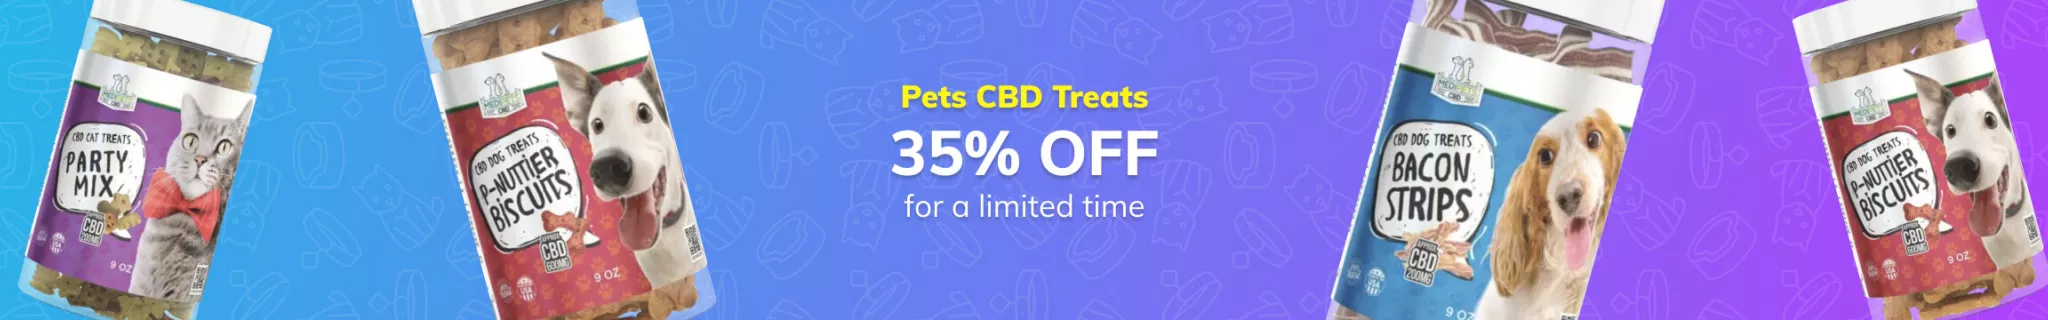 CBD Pet Treats 35% OFF